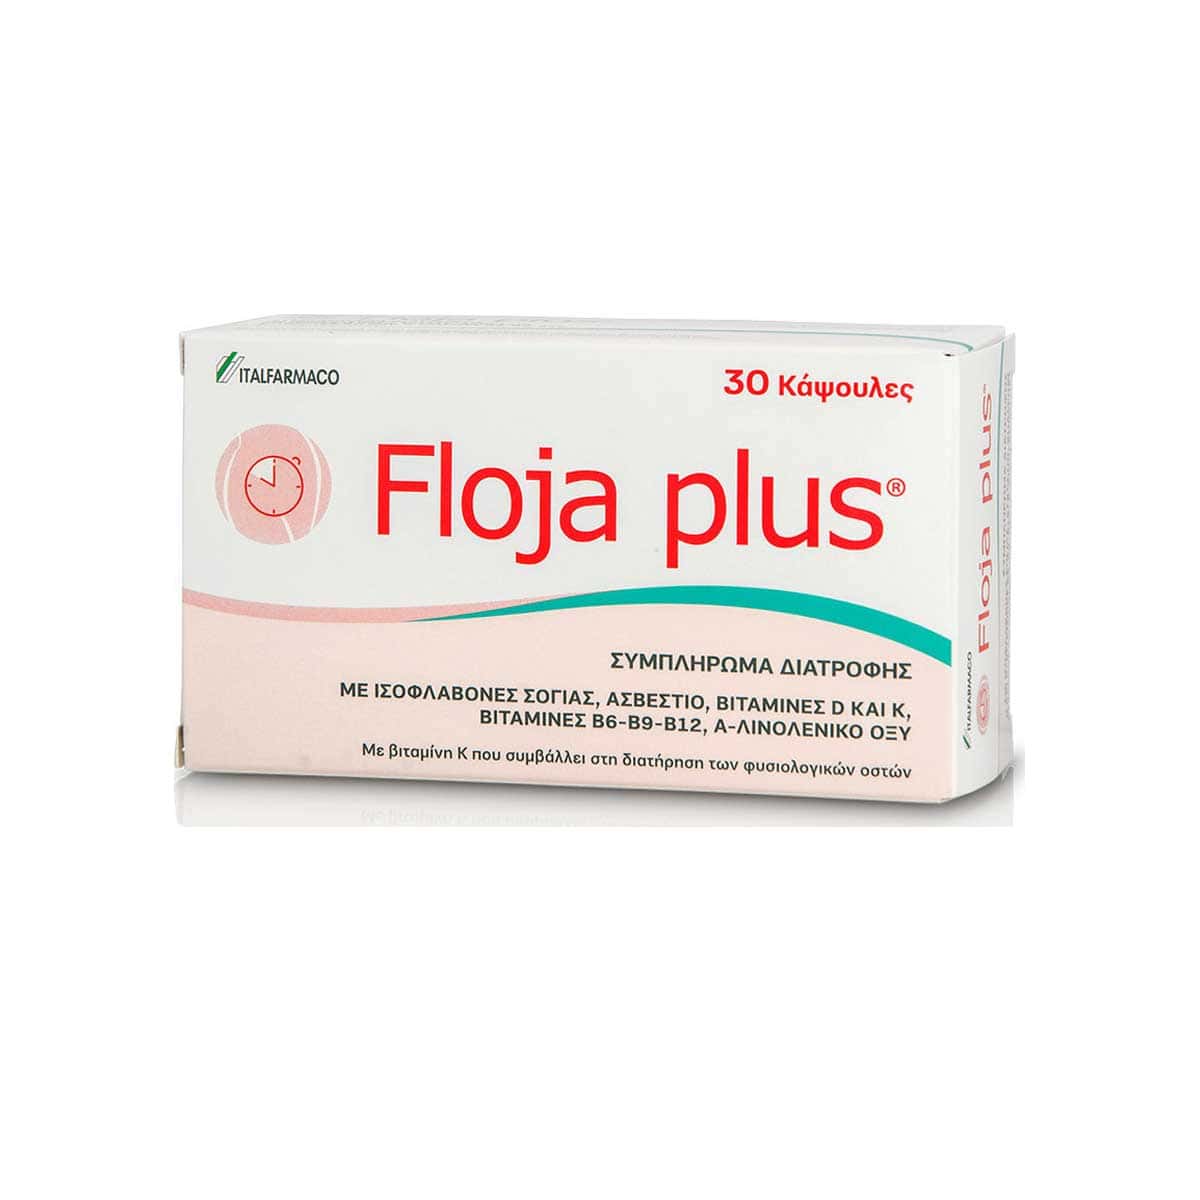 Italfarmaco-Floja-Plus-30-kapsoules-8024790281007